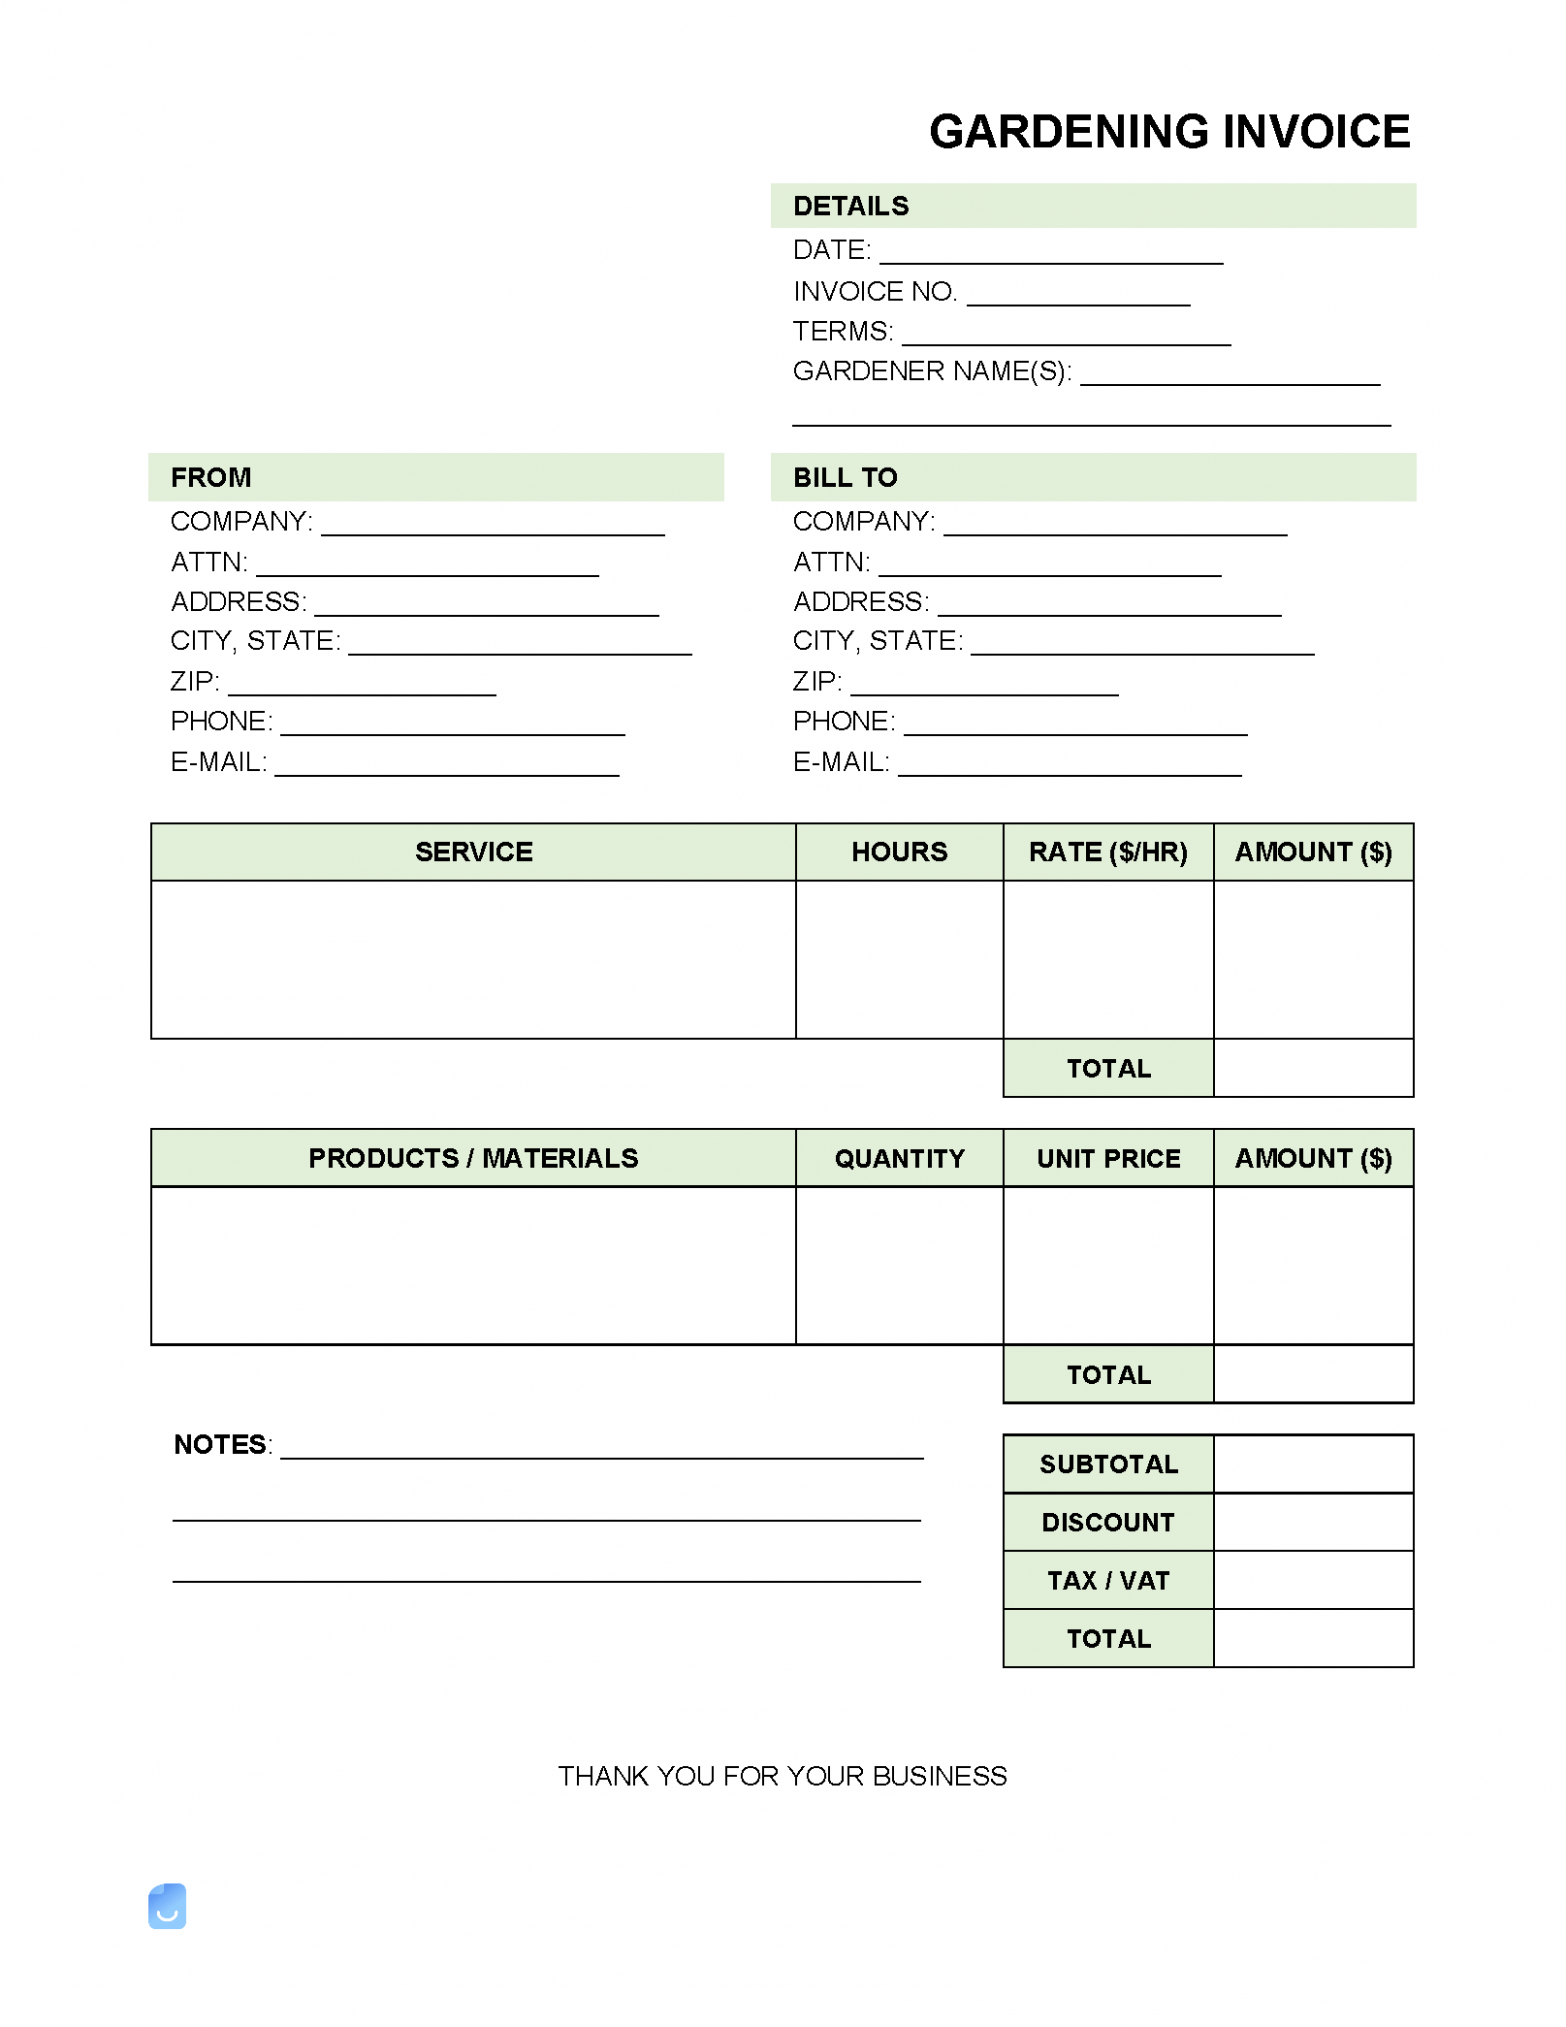 Editable Gardening Invoice Template Sample